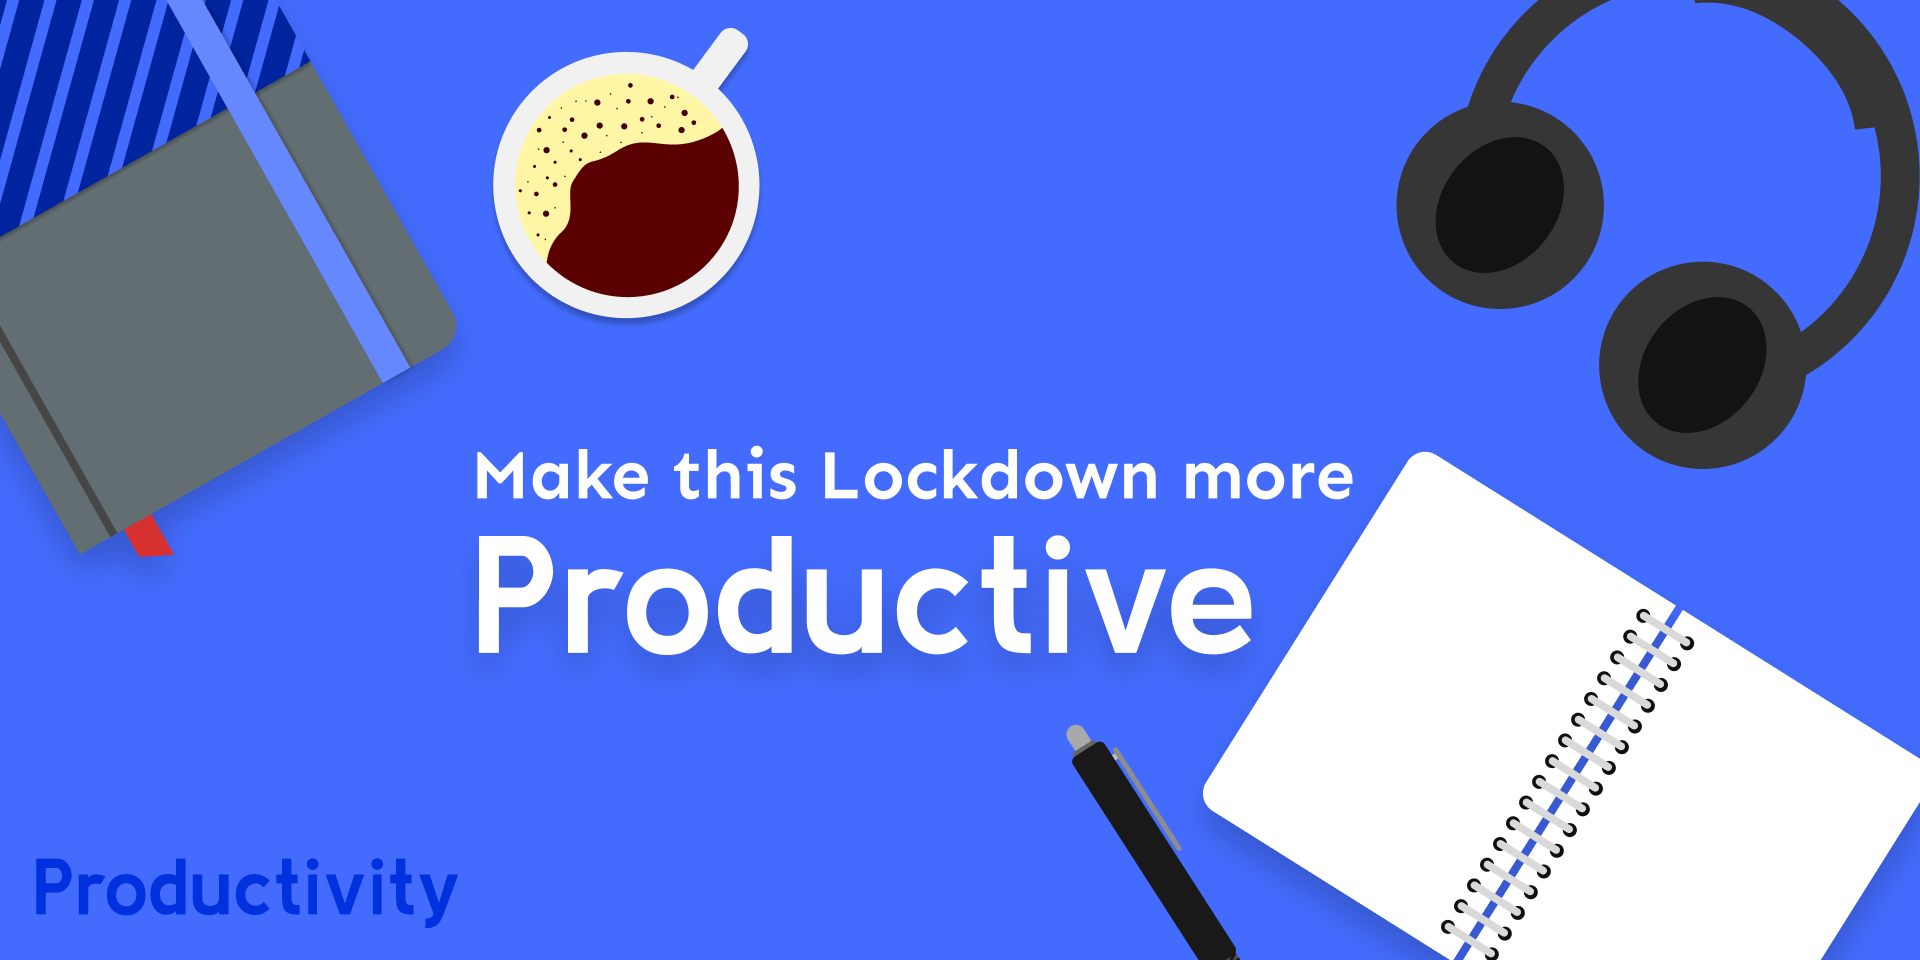 Make this Lockdown more Productive